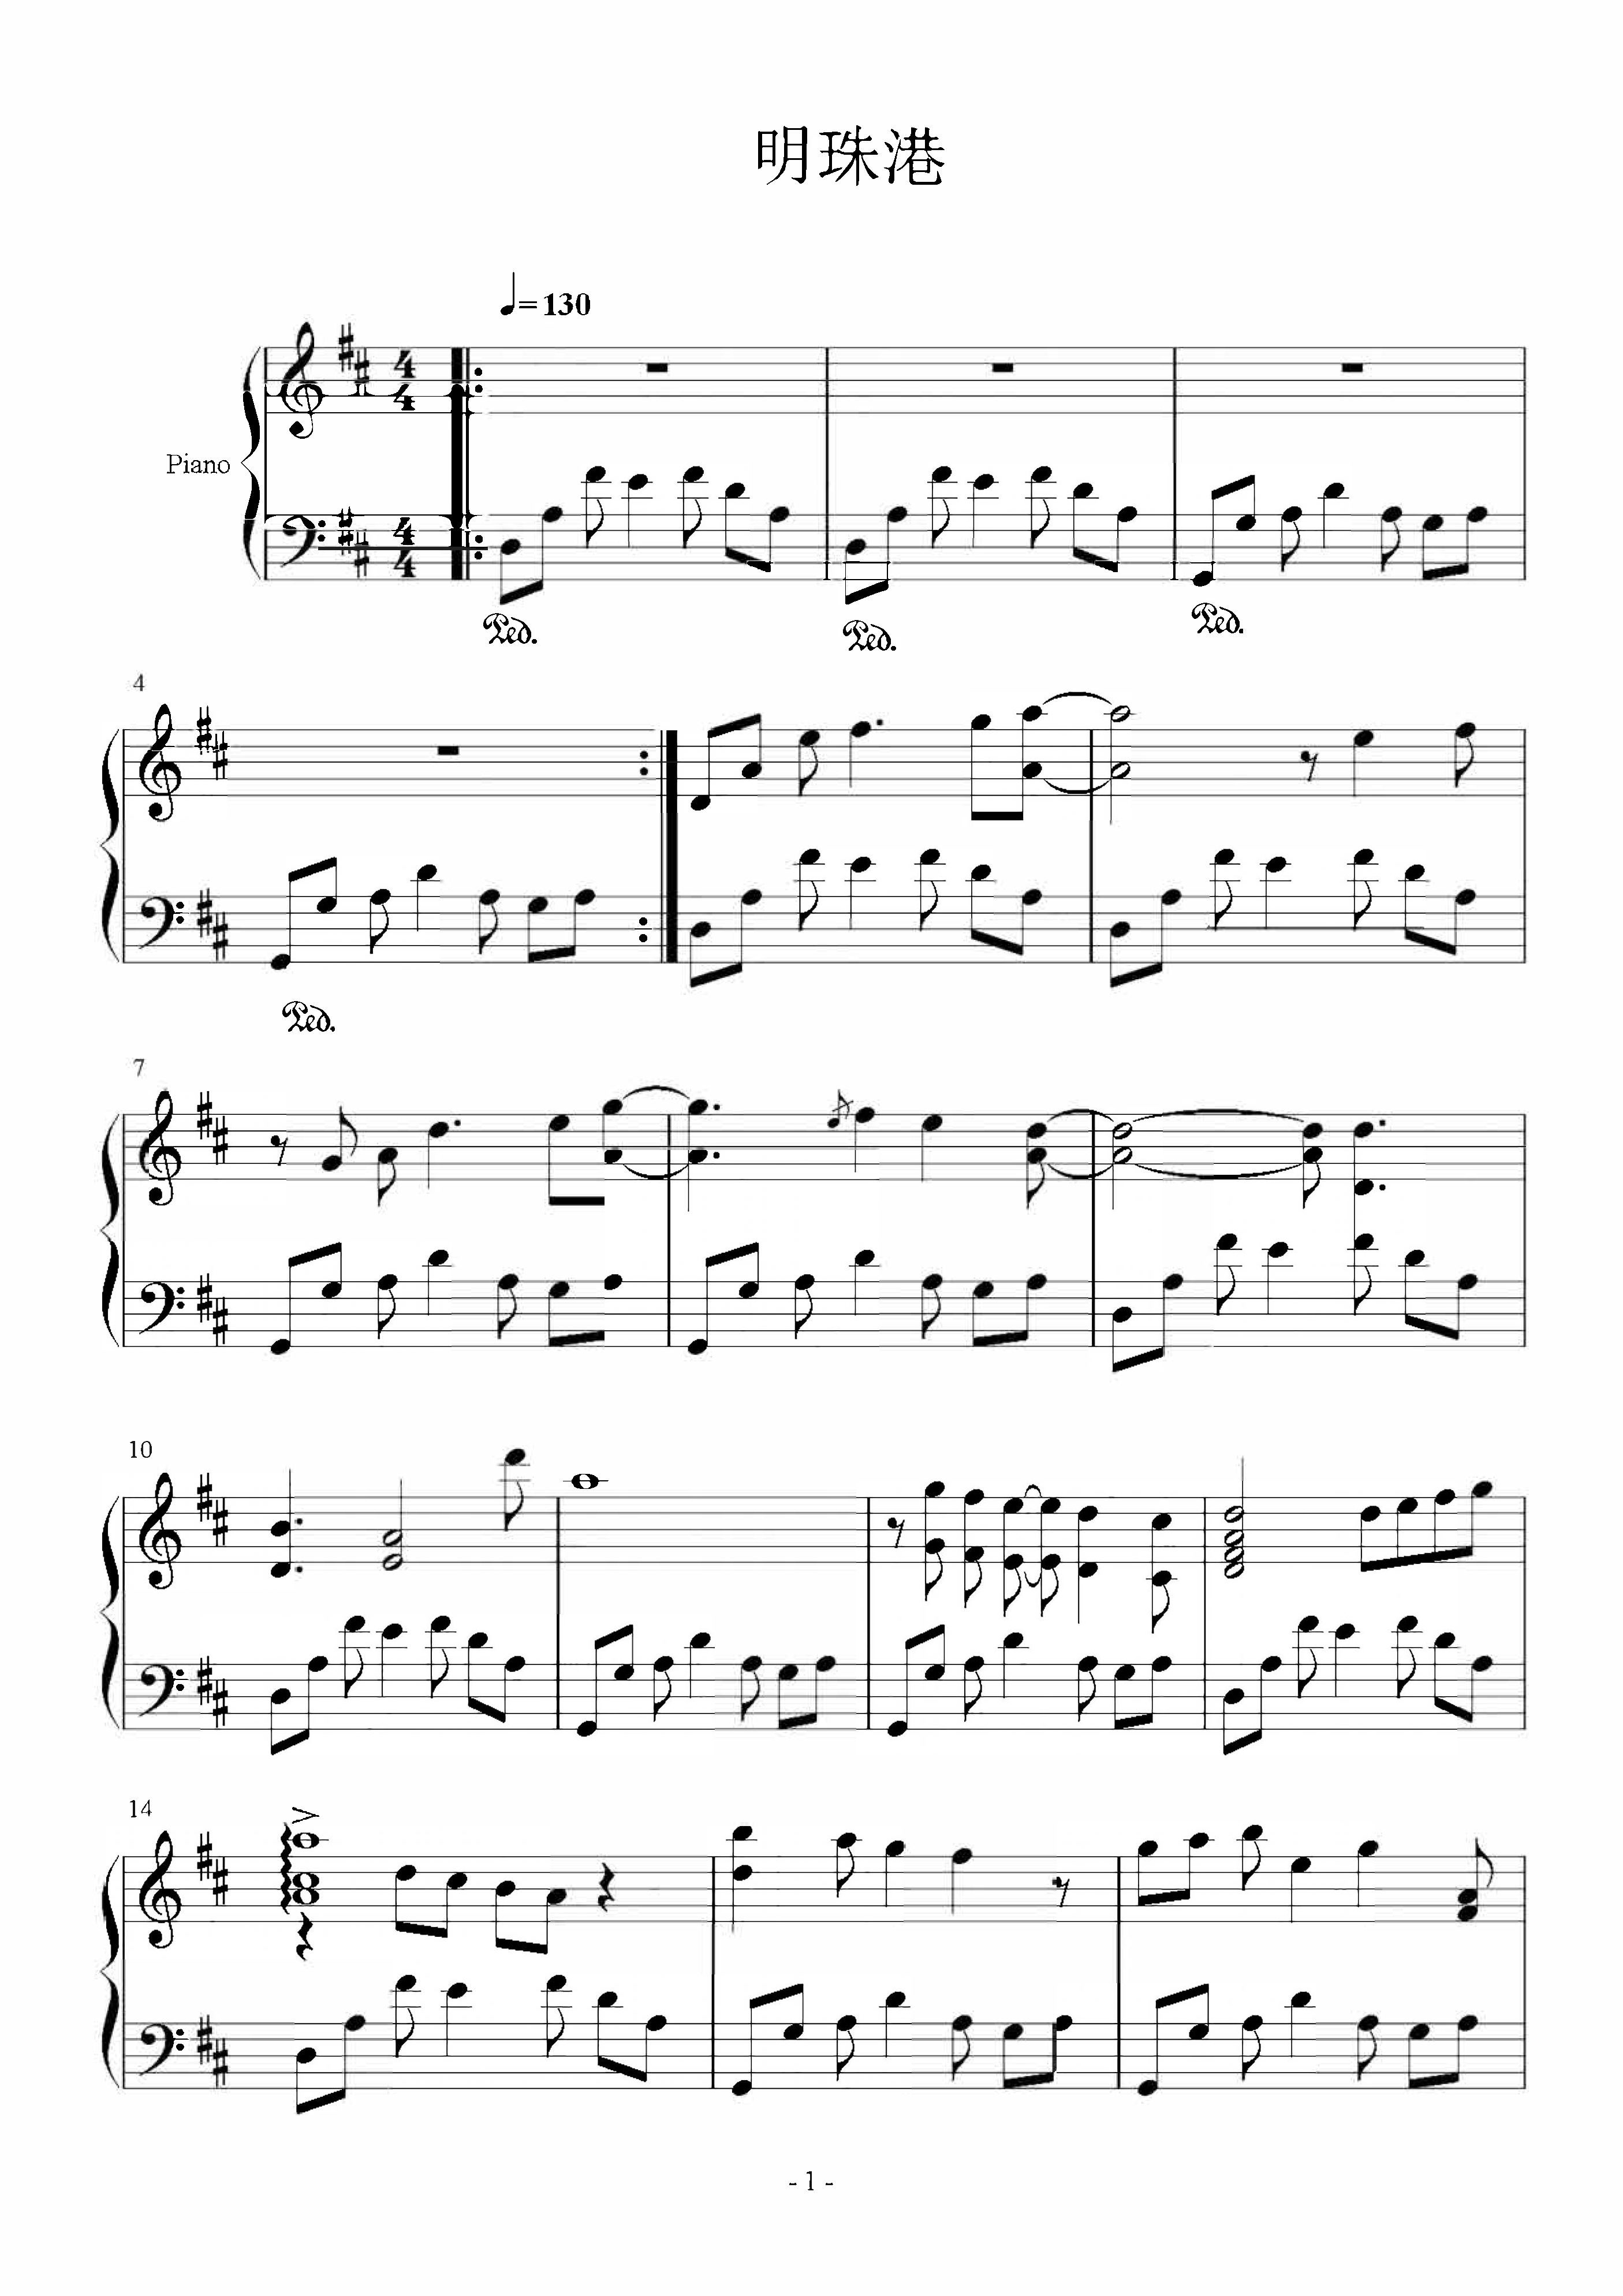 FC《冒险岛》BGM完整版钢琴曲谱，于斯课堂精心出品。于斯曲谱大全，钢琴谱，简谱，五线谱尽在其中。